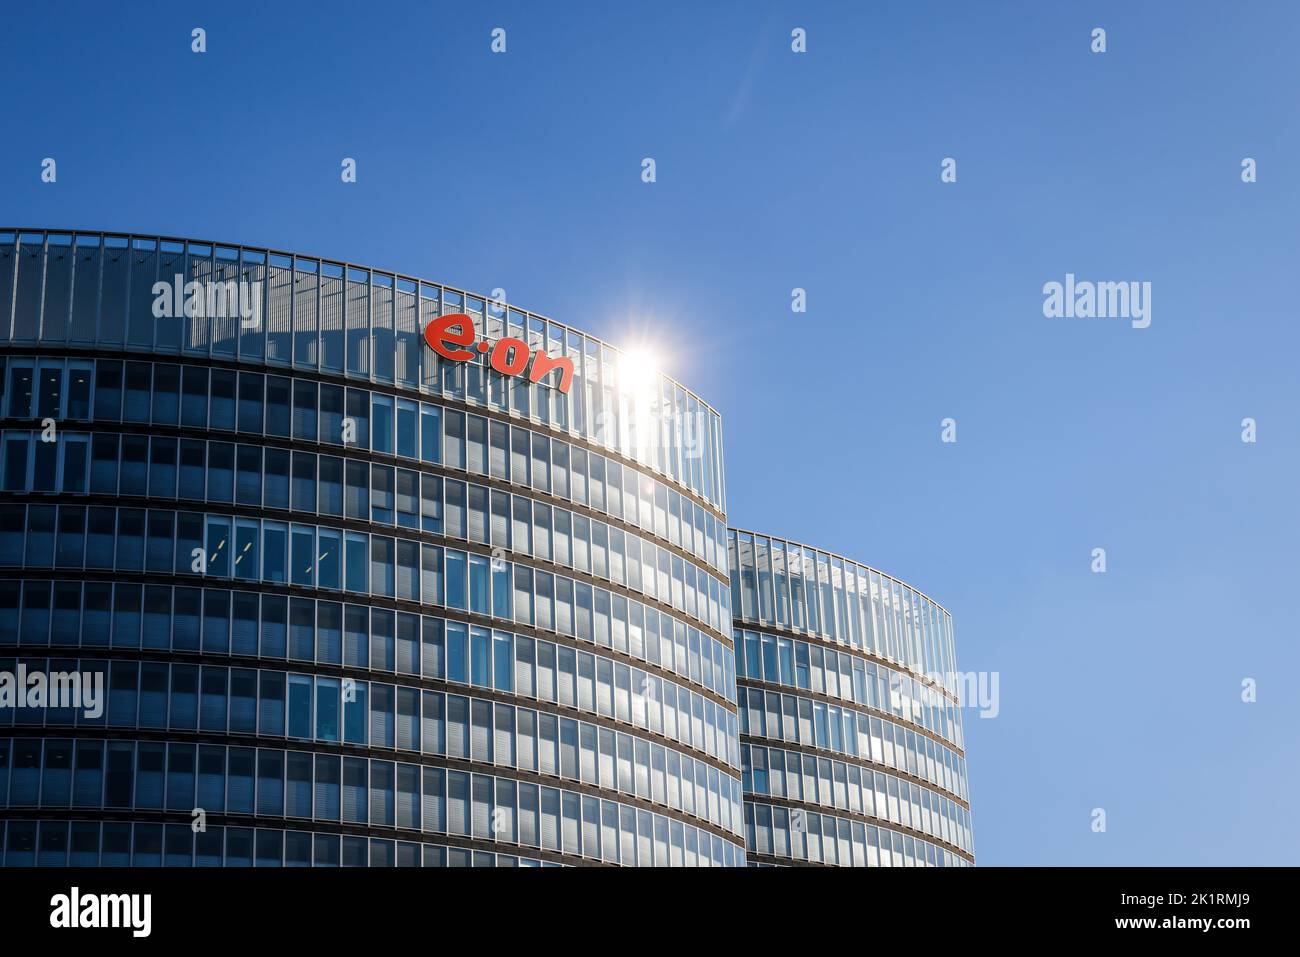 Essen, North Rhine-Westphalia, Germany - E.ON headquarters. Company logo on the facade of the headquarters. Stock Photo